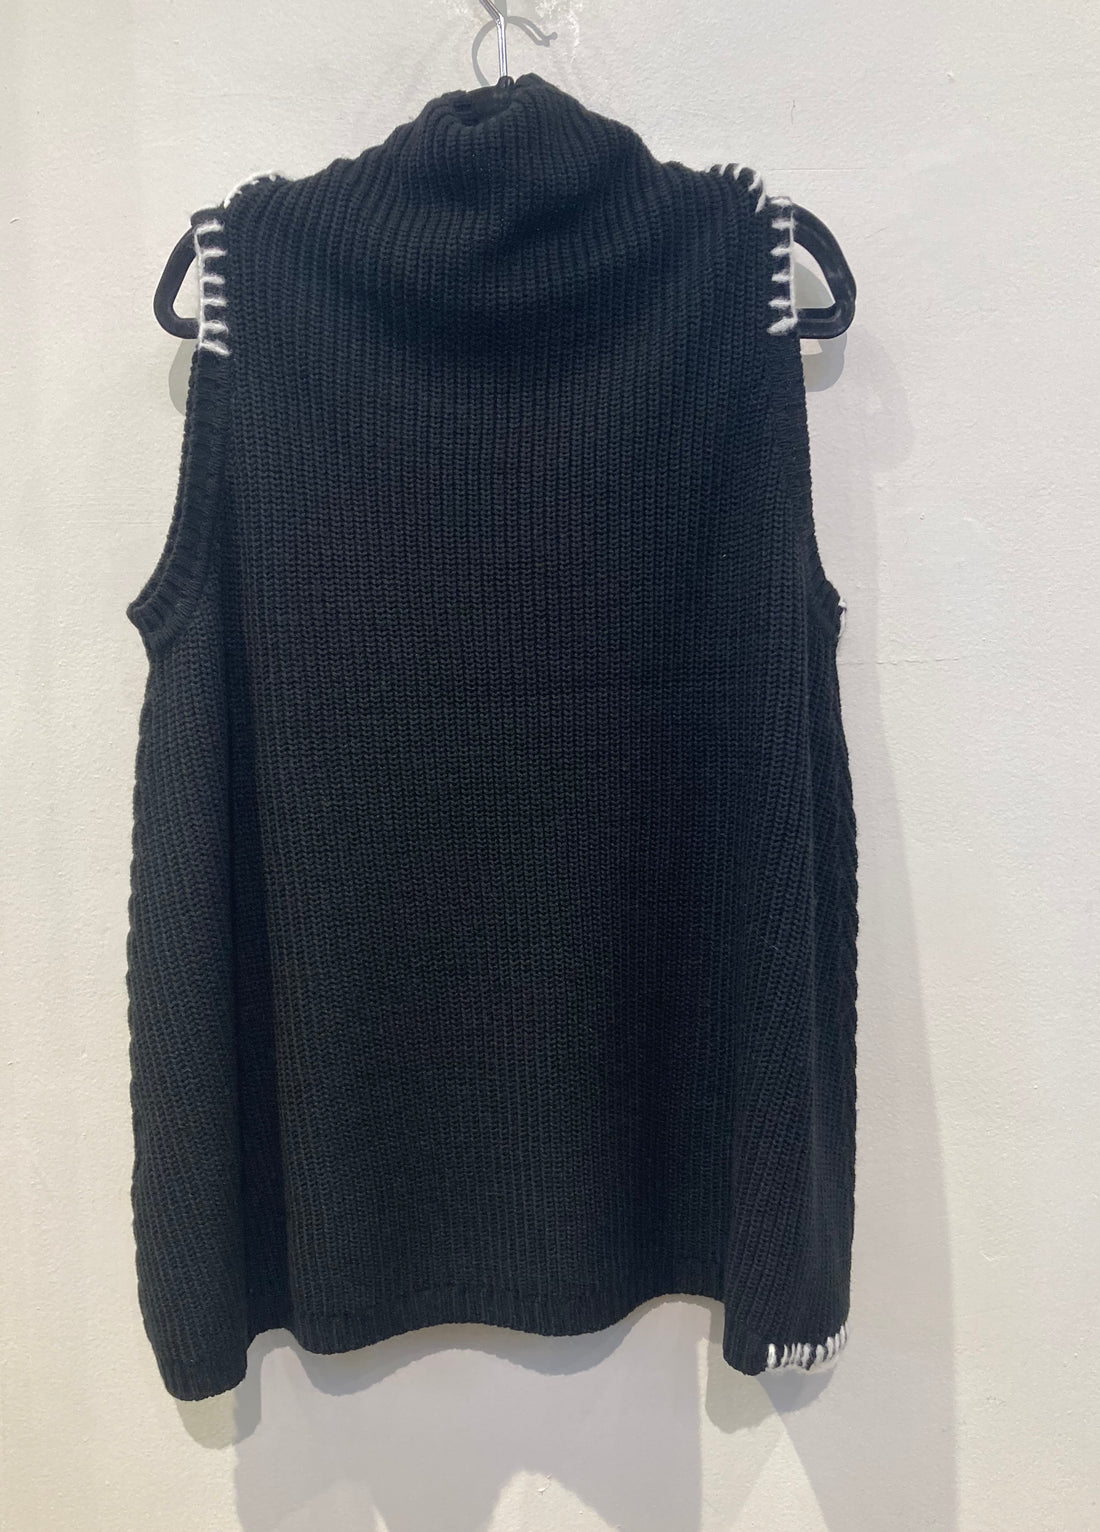 Black Sweater Sleeveless with White Trim